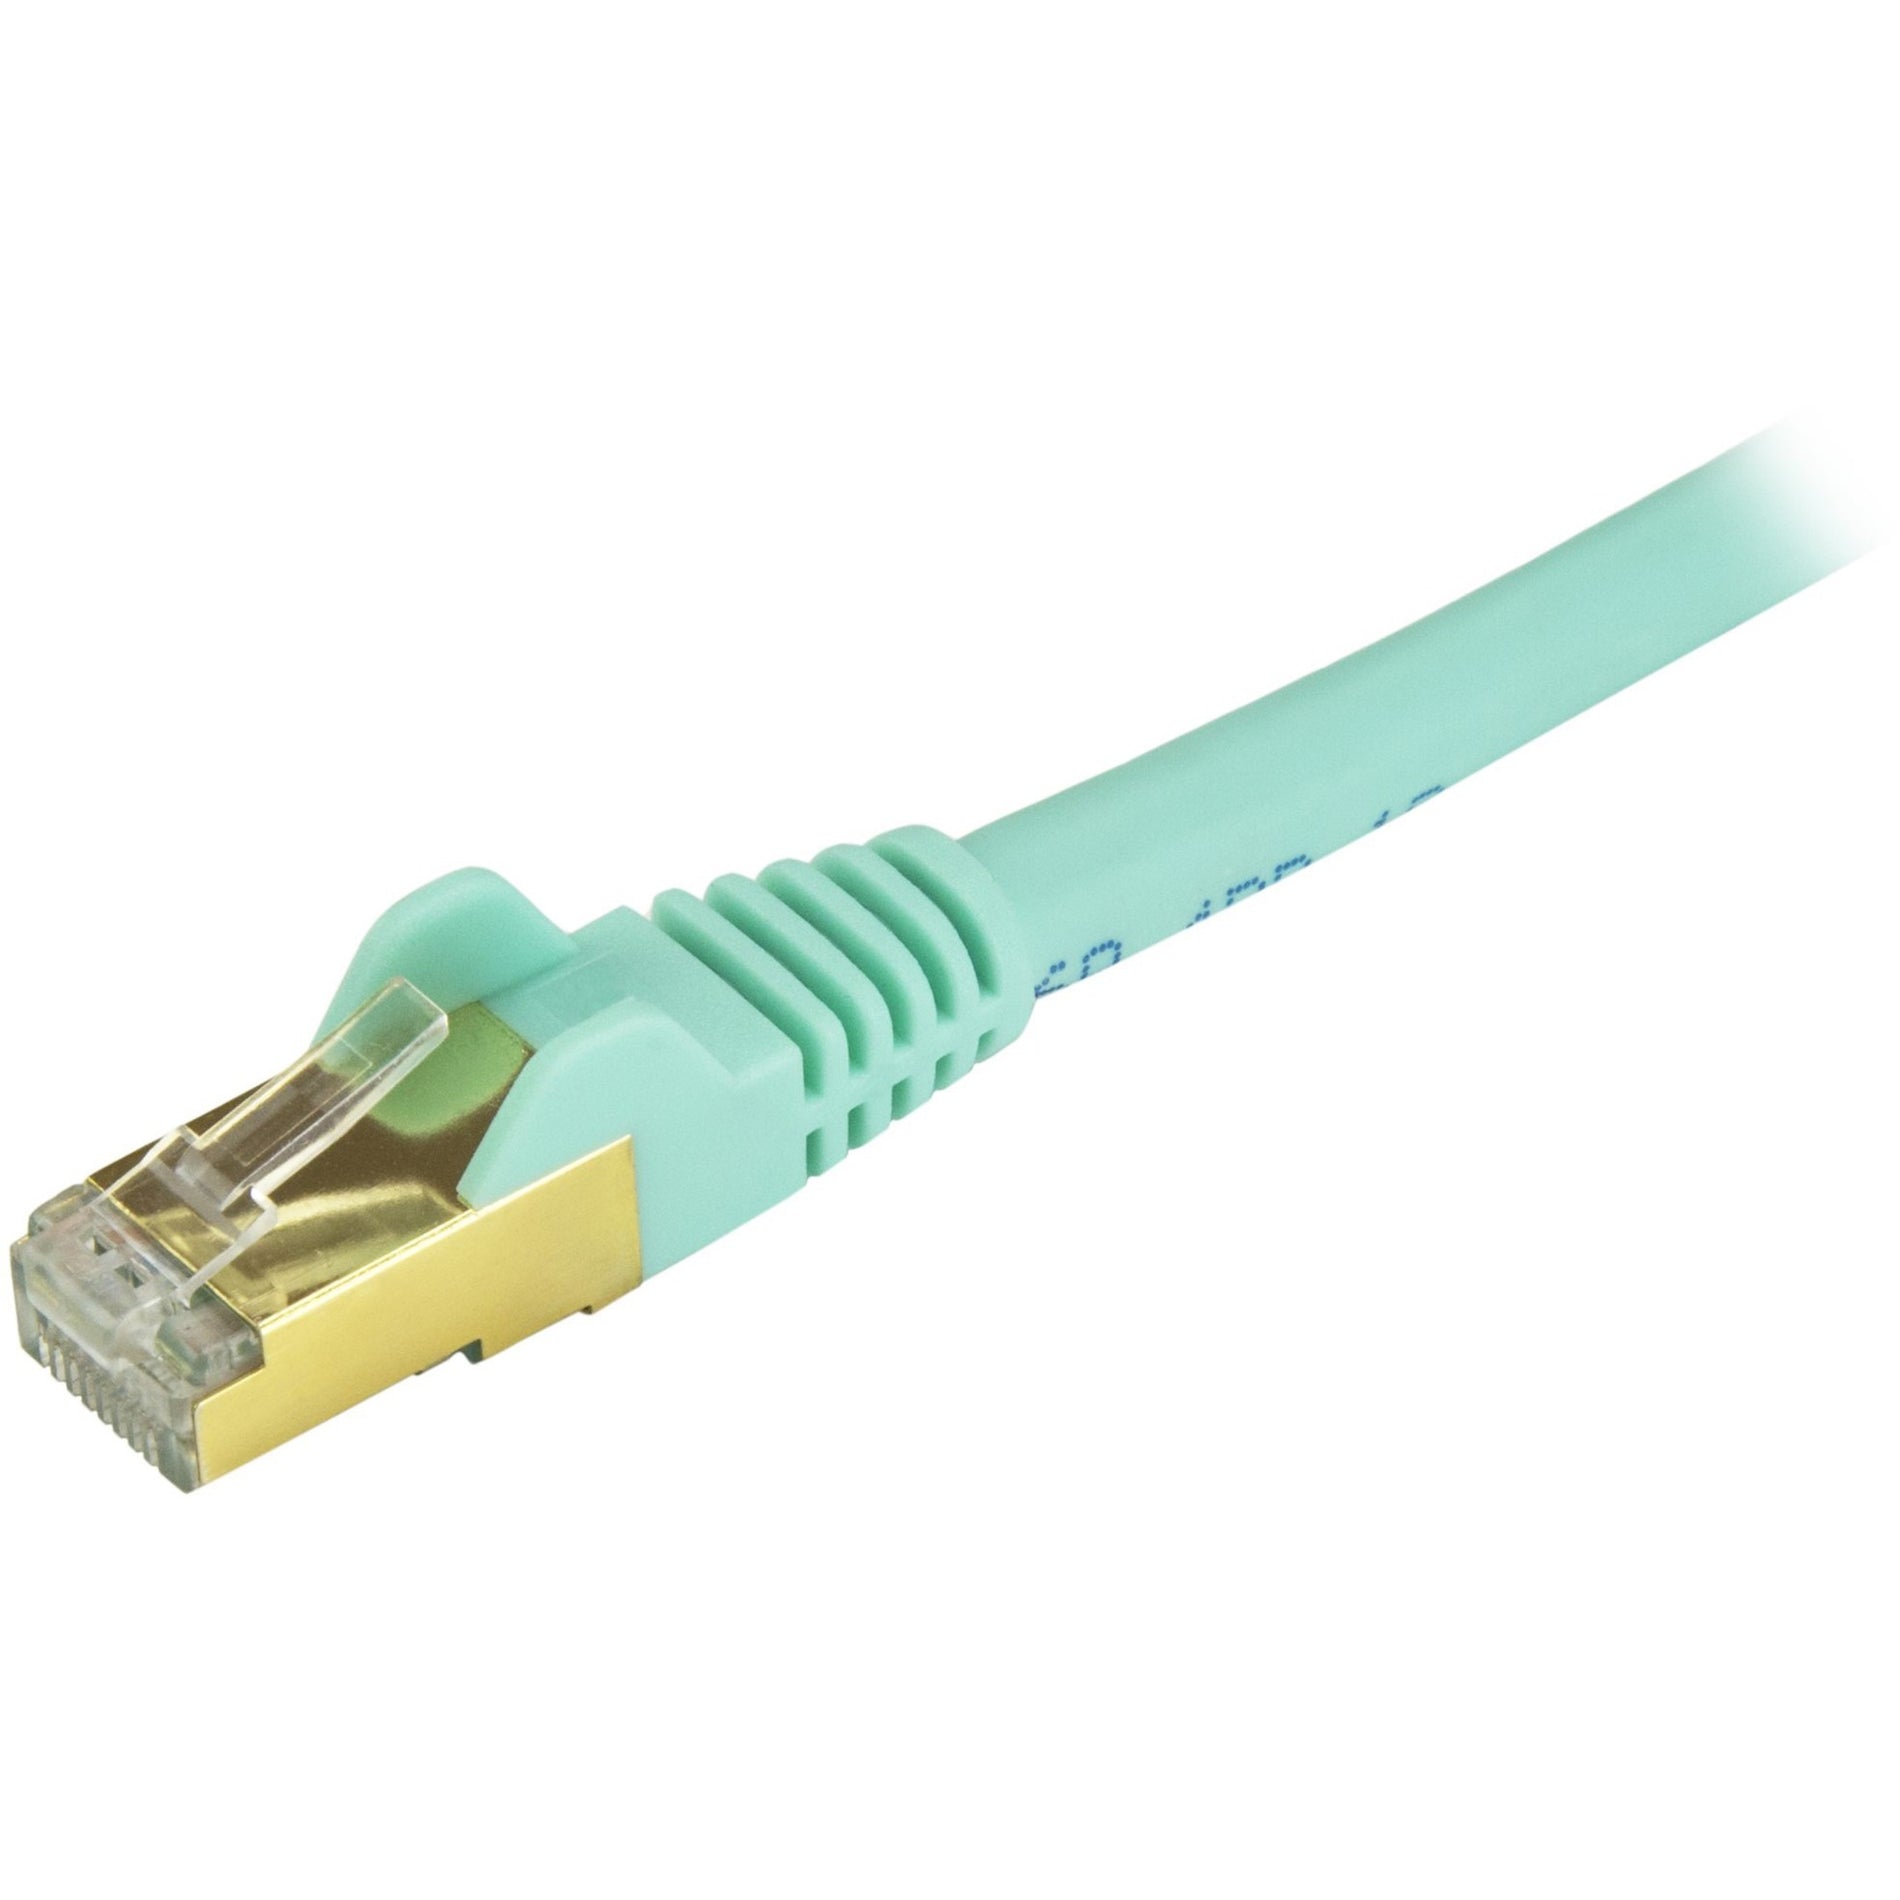 StarTech.com C6ASPAT2AQ Cat6a Ethernet Patch Cable - Shielded (STP) - 2 ft., Aqua, Snagless RJ45 Ethernet Cord